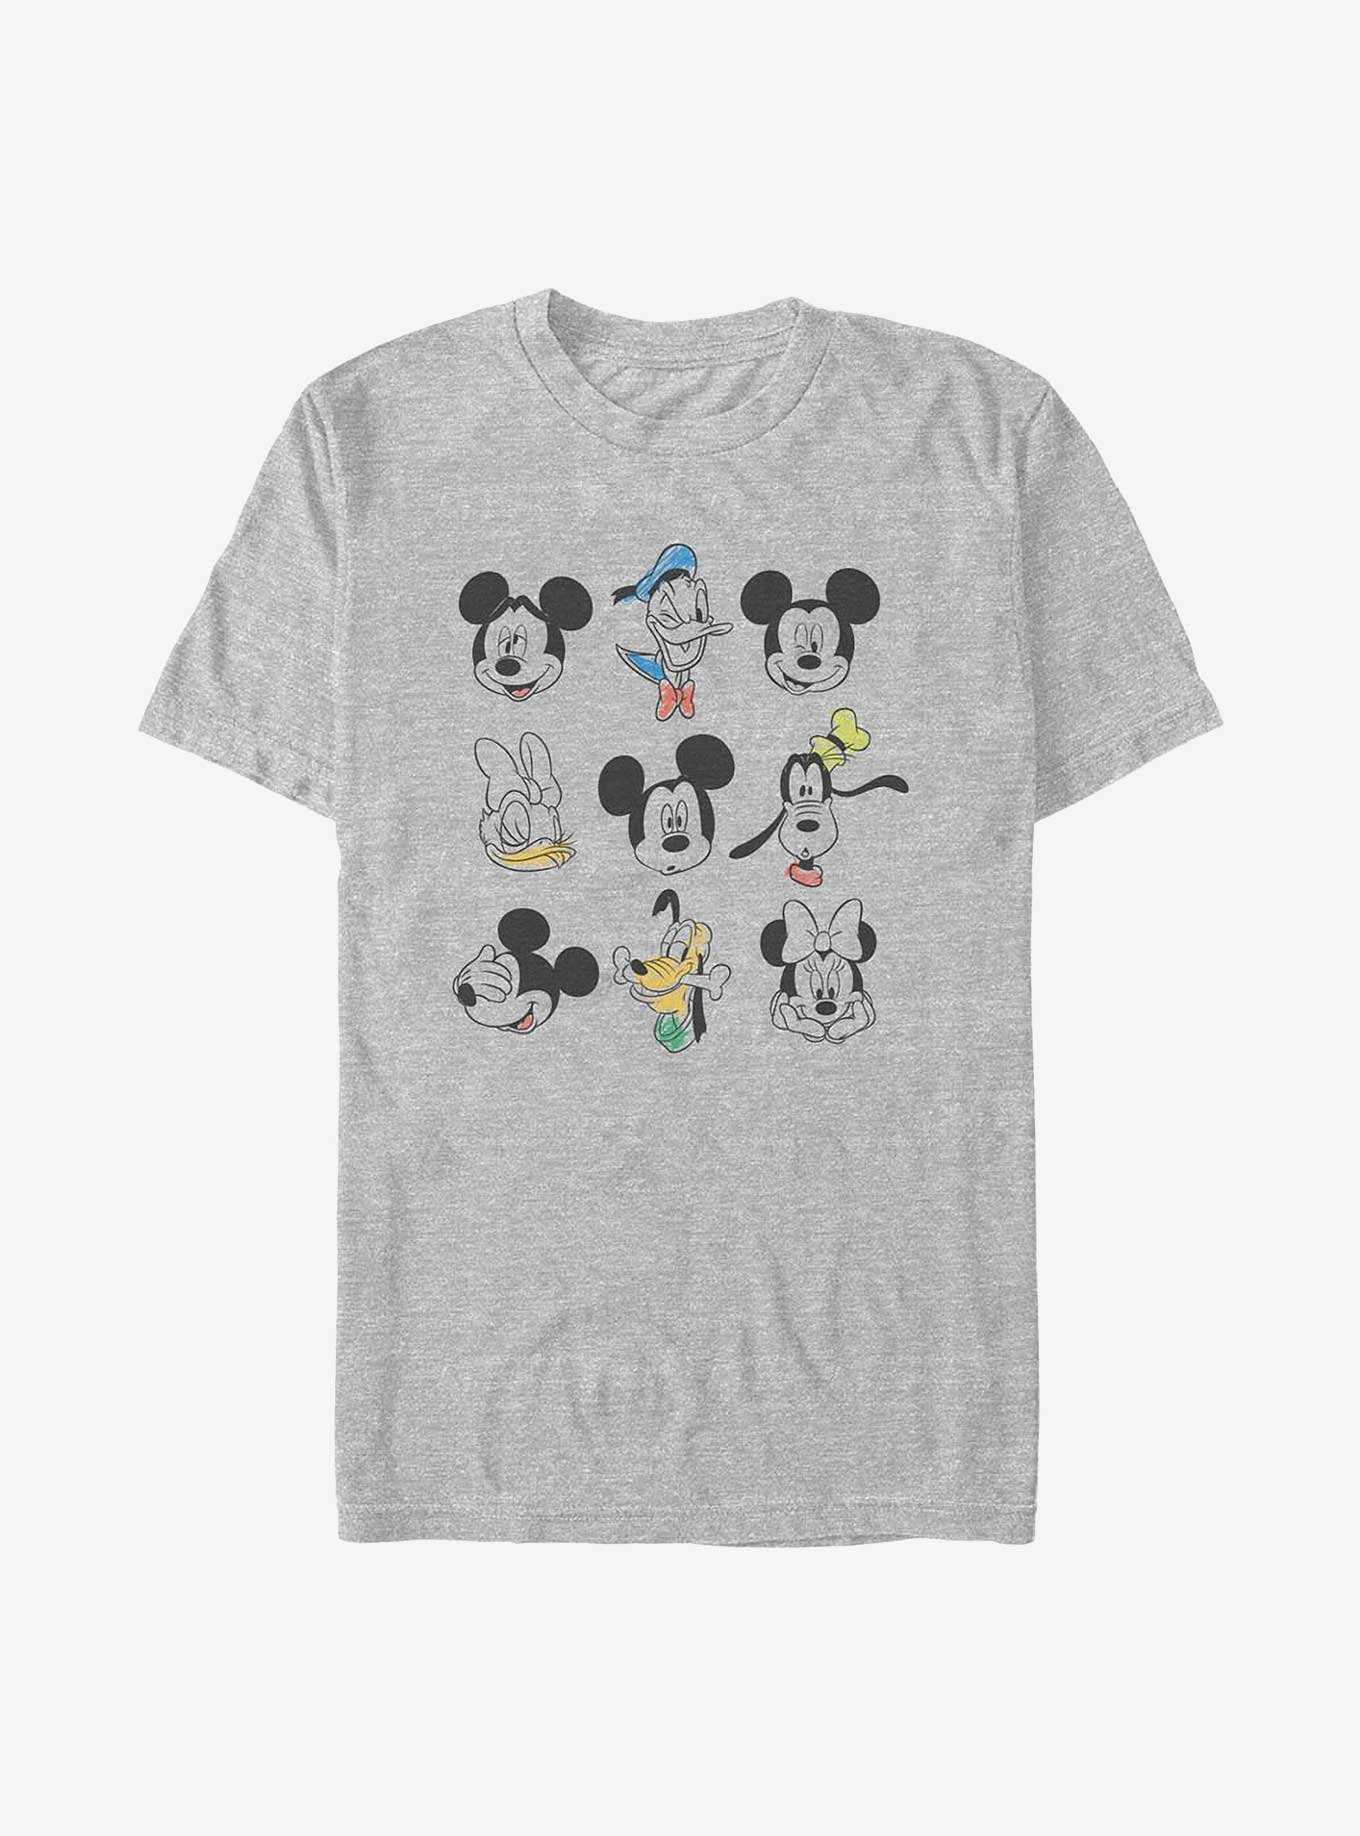 Disney Mickey Mouse Friends Faces T-Shirt, , hi-res